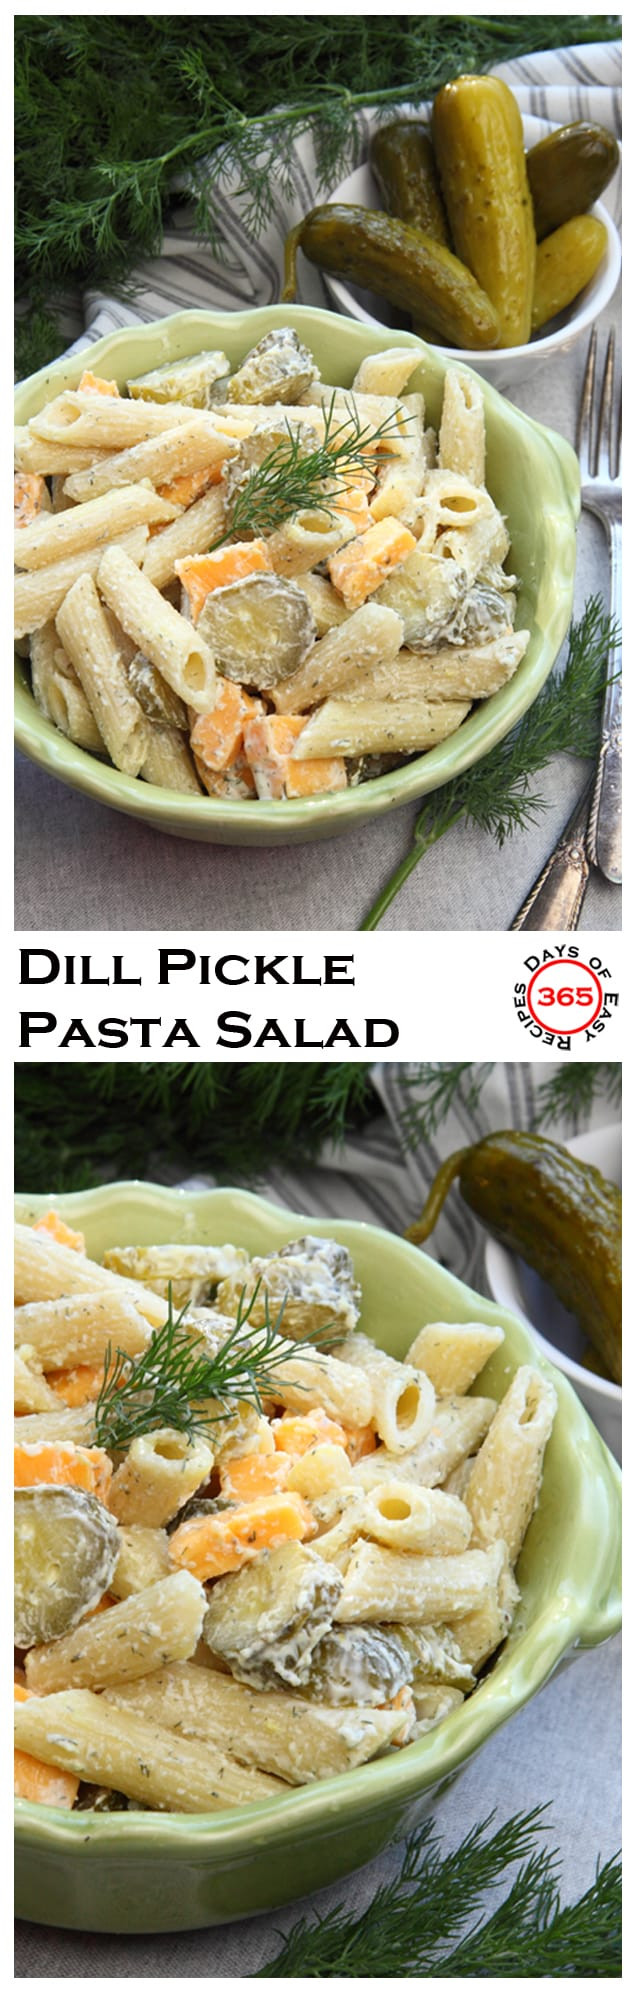 Dill Pickle Pasta Salad
 Dill Pickle Pasta Salad 365 Days of Easy Recipes